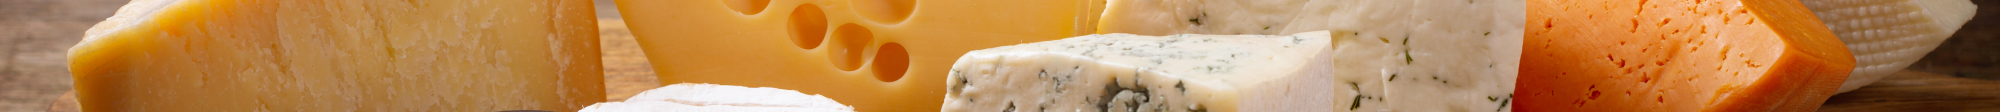 Comprar  quesos Irlanda gourmet online | Mixtura Gourmet